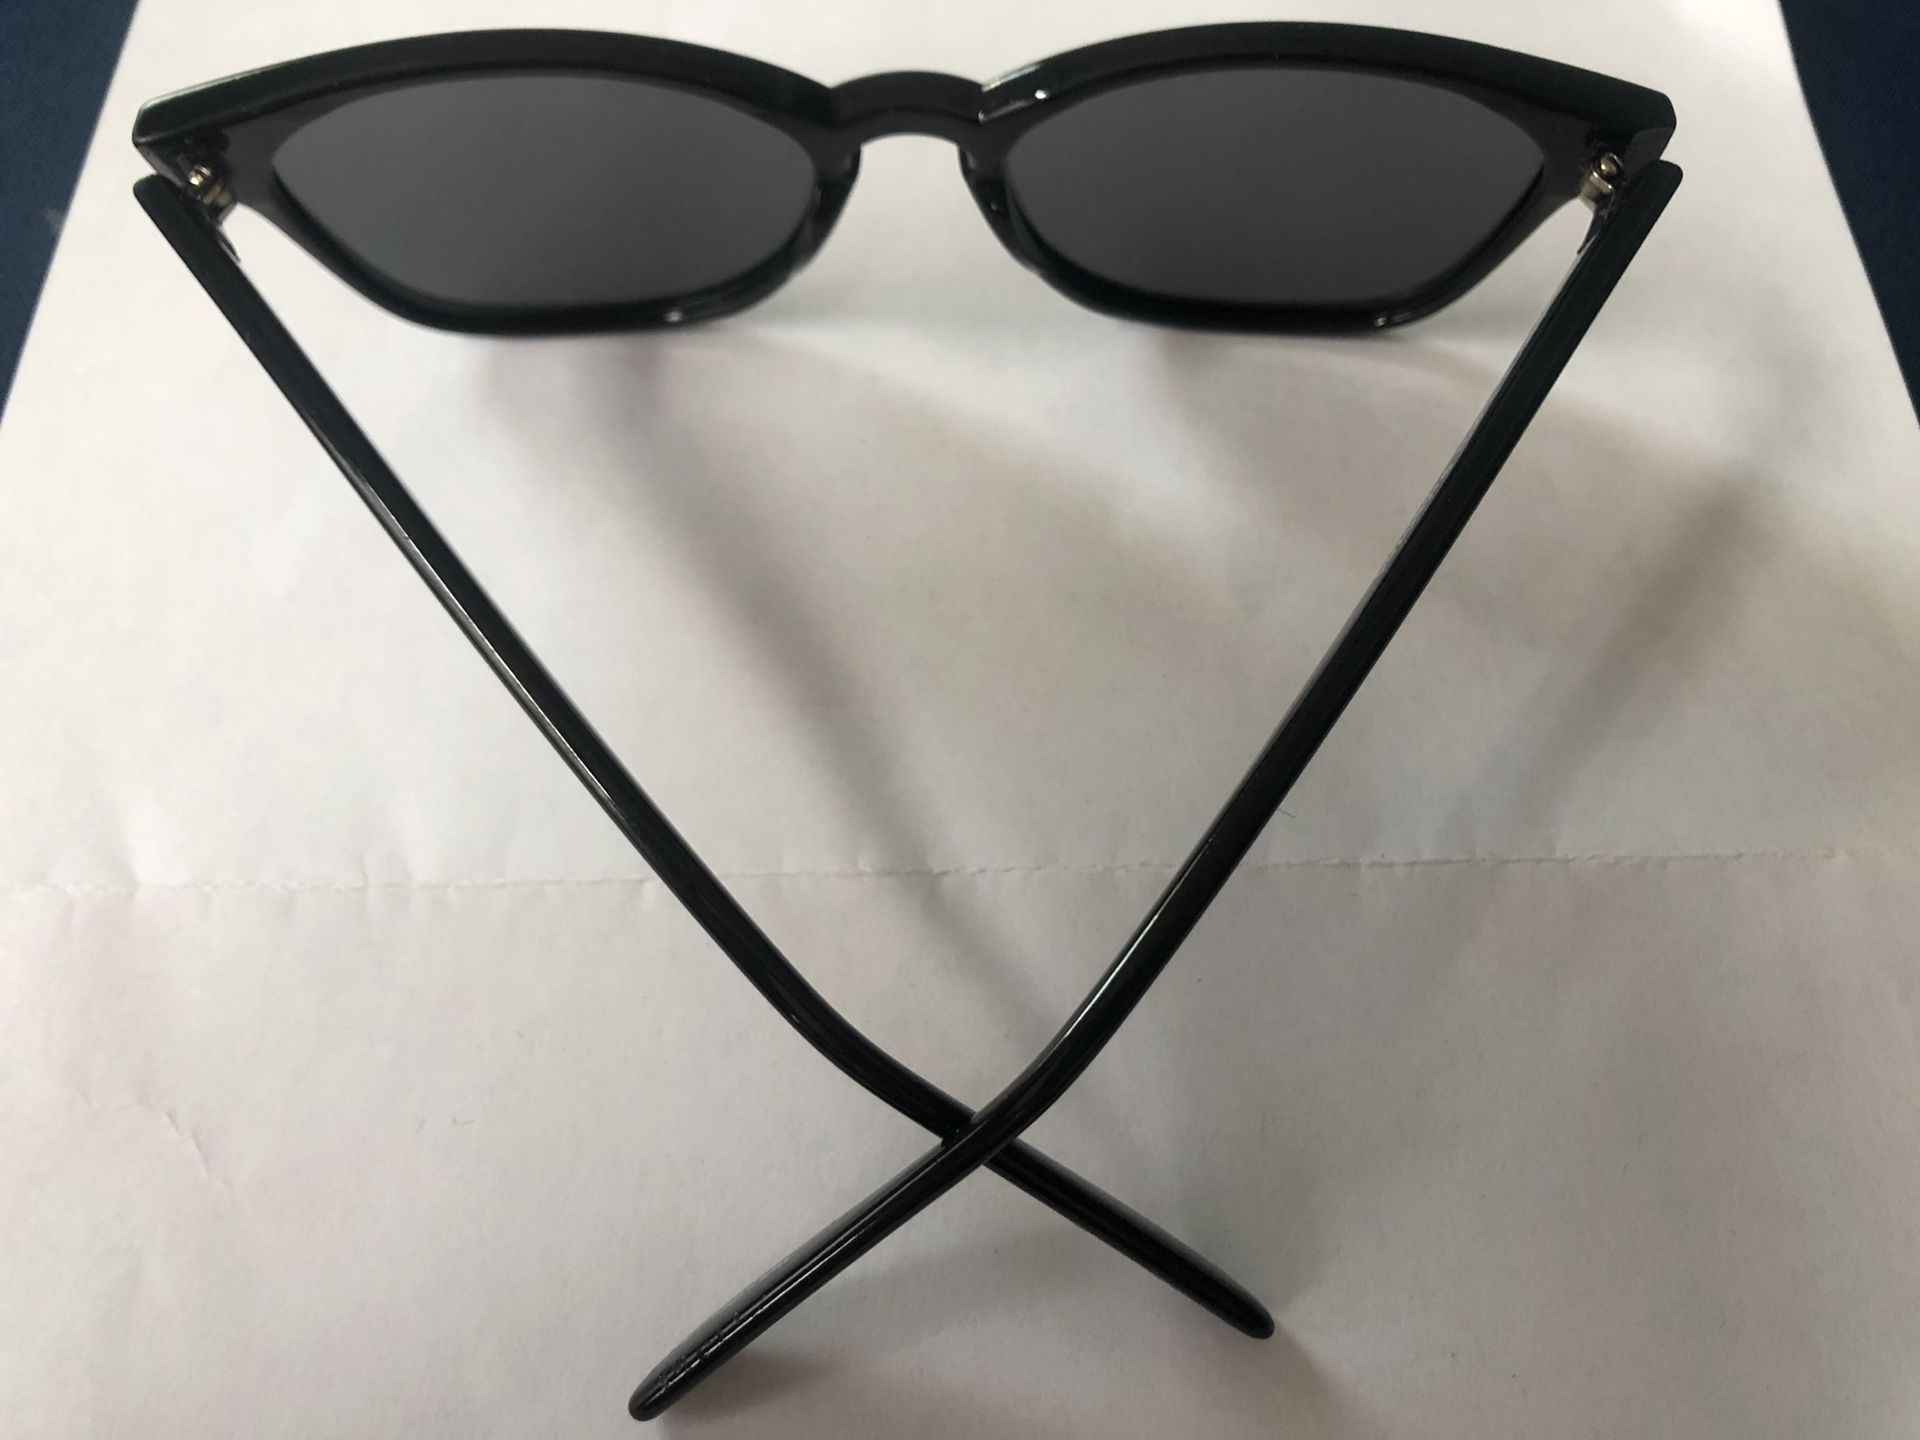 Authentic Cole Haan sunglasses c17071 polarized Black On Black